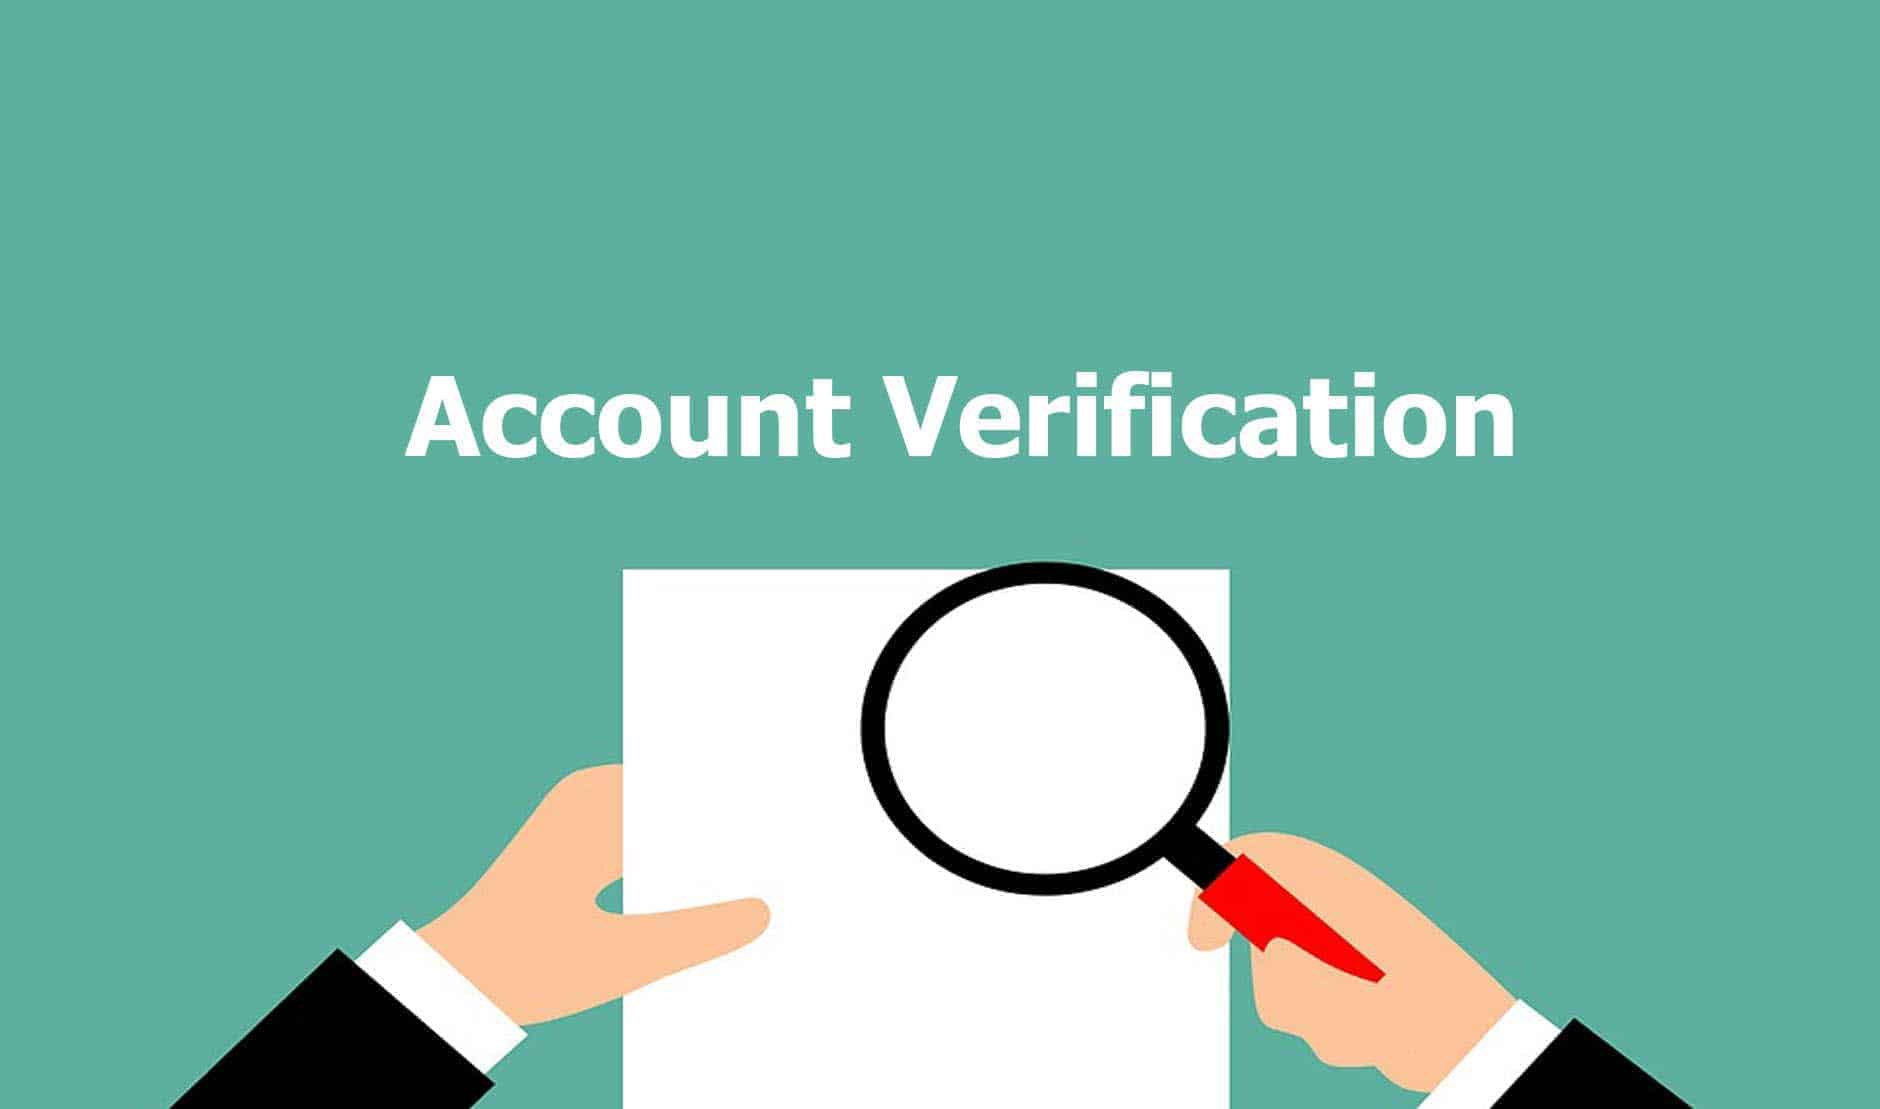 verify your account